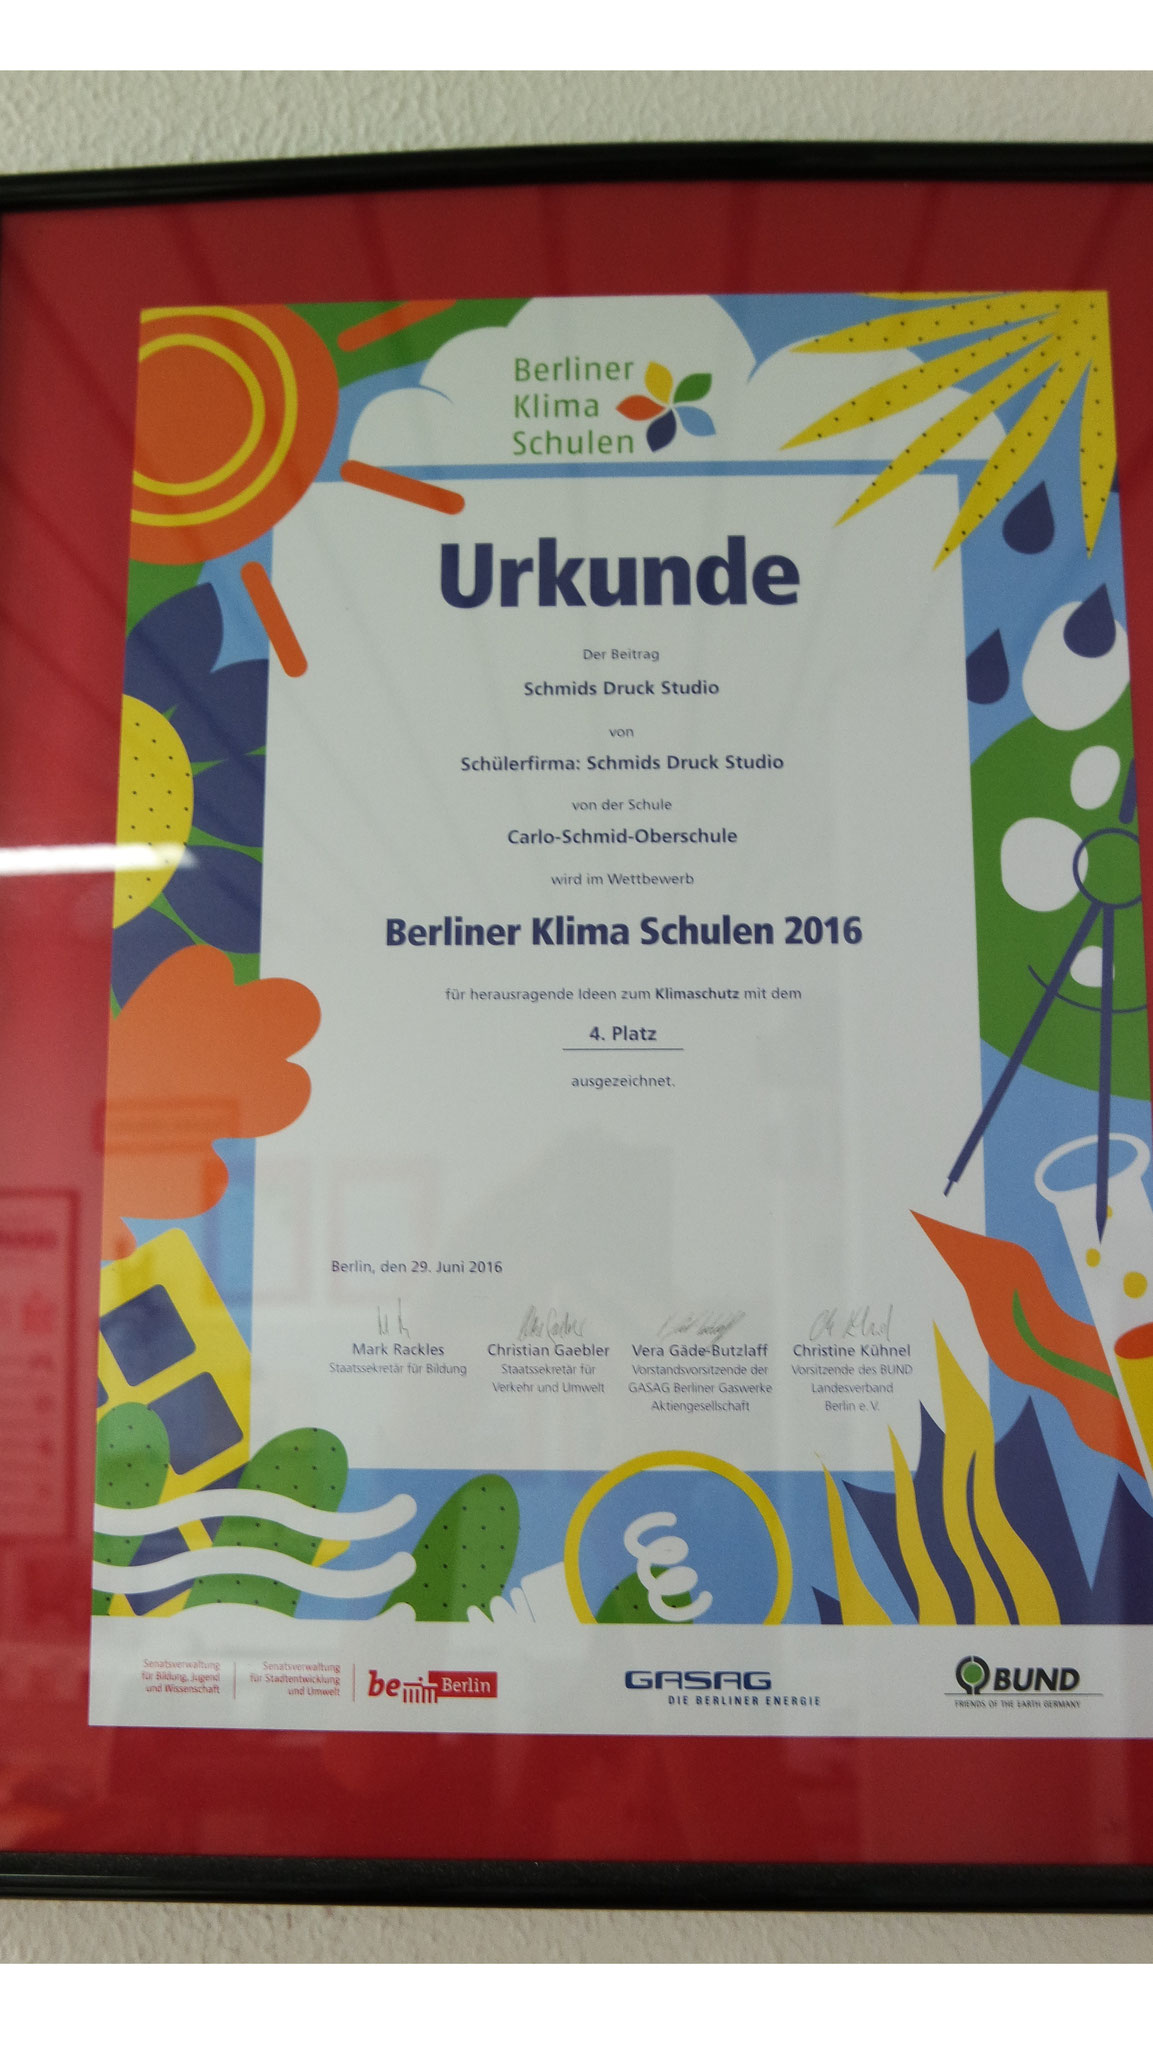 2016: 4. Platz bei "Berliner Klima Schule"